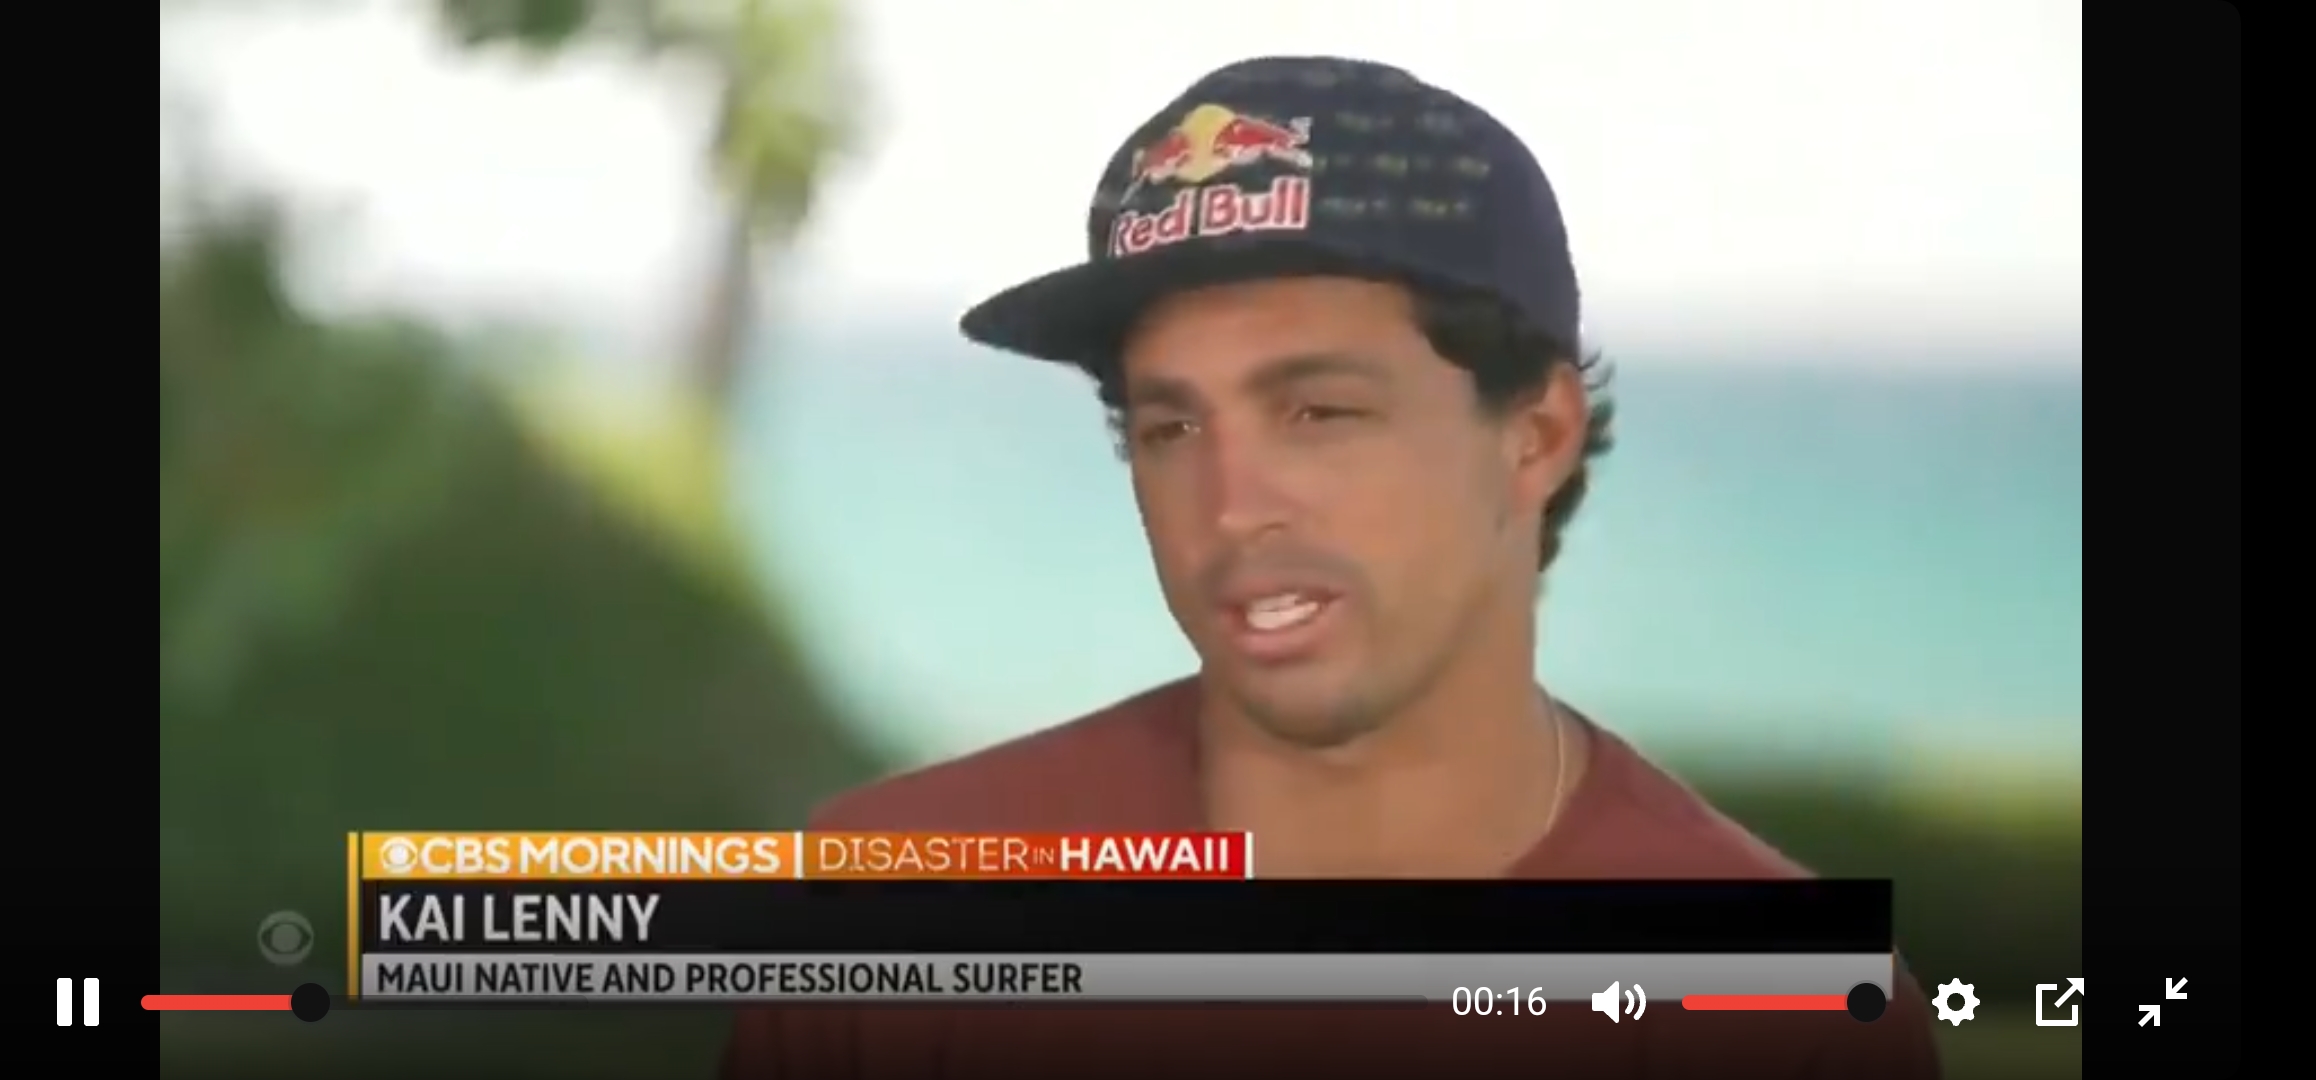 Hawaiian pro surfer responds – “no help available”